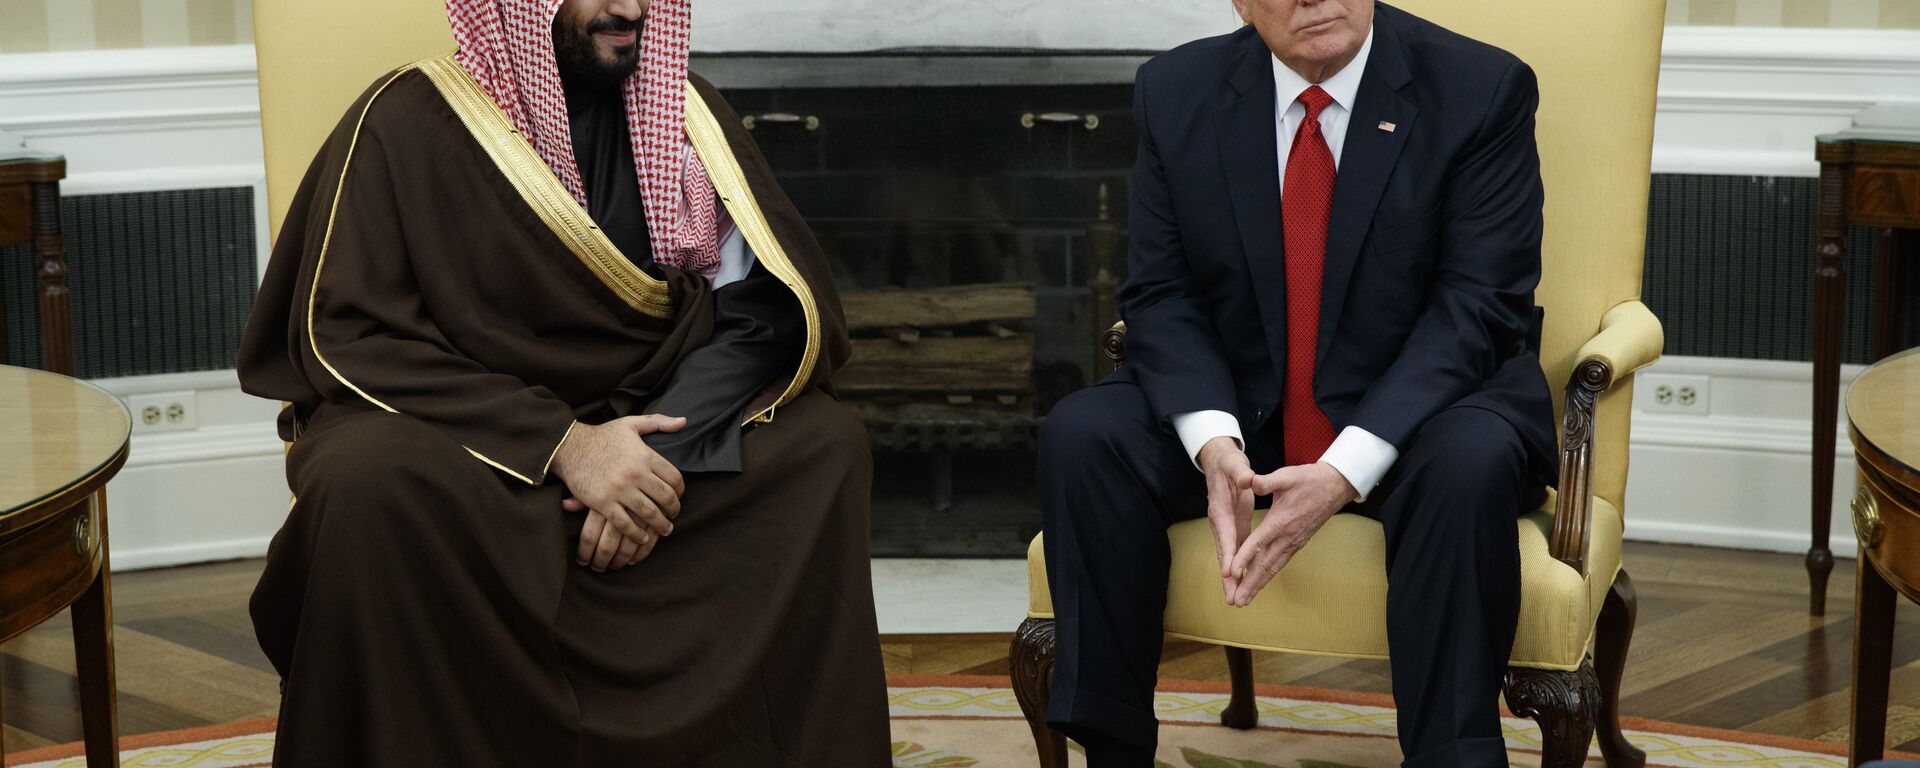 President Donald Trump meets with Saudi Defense Minister and Deputy Crown Prince Mohammed bin Salman bin Abdulaziz Al Saud in the Oval Office of the White House in Washington - Sputnik International, 1920, 11.09.2020